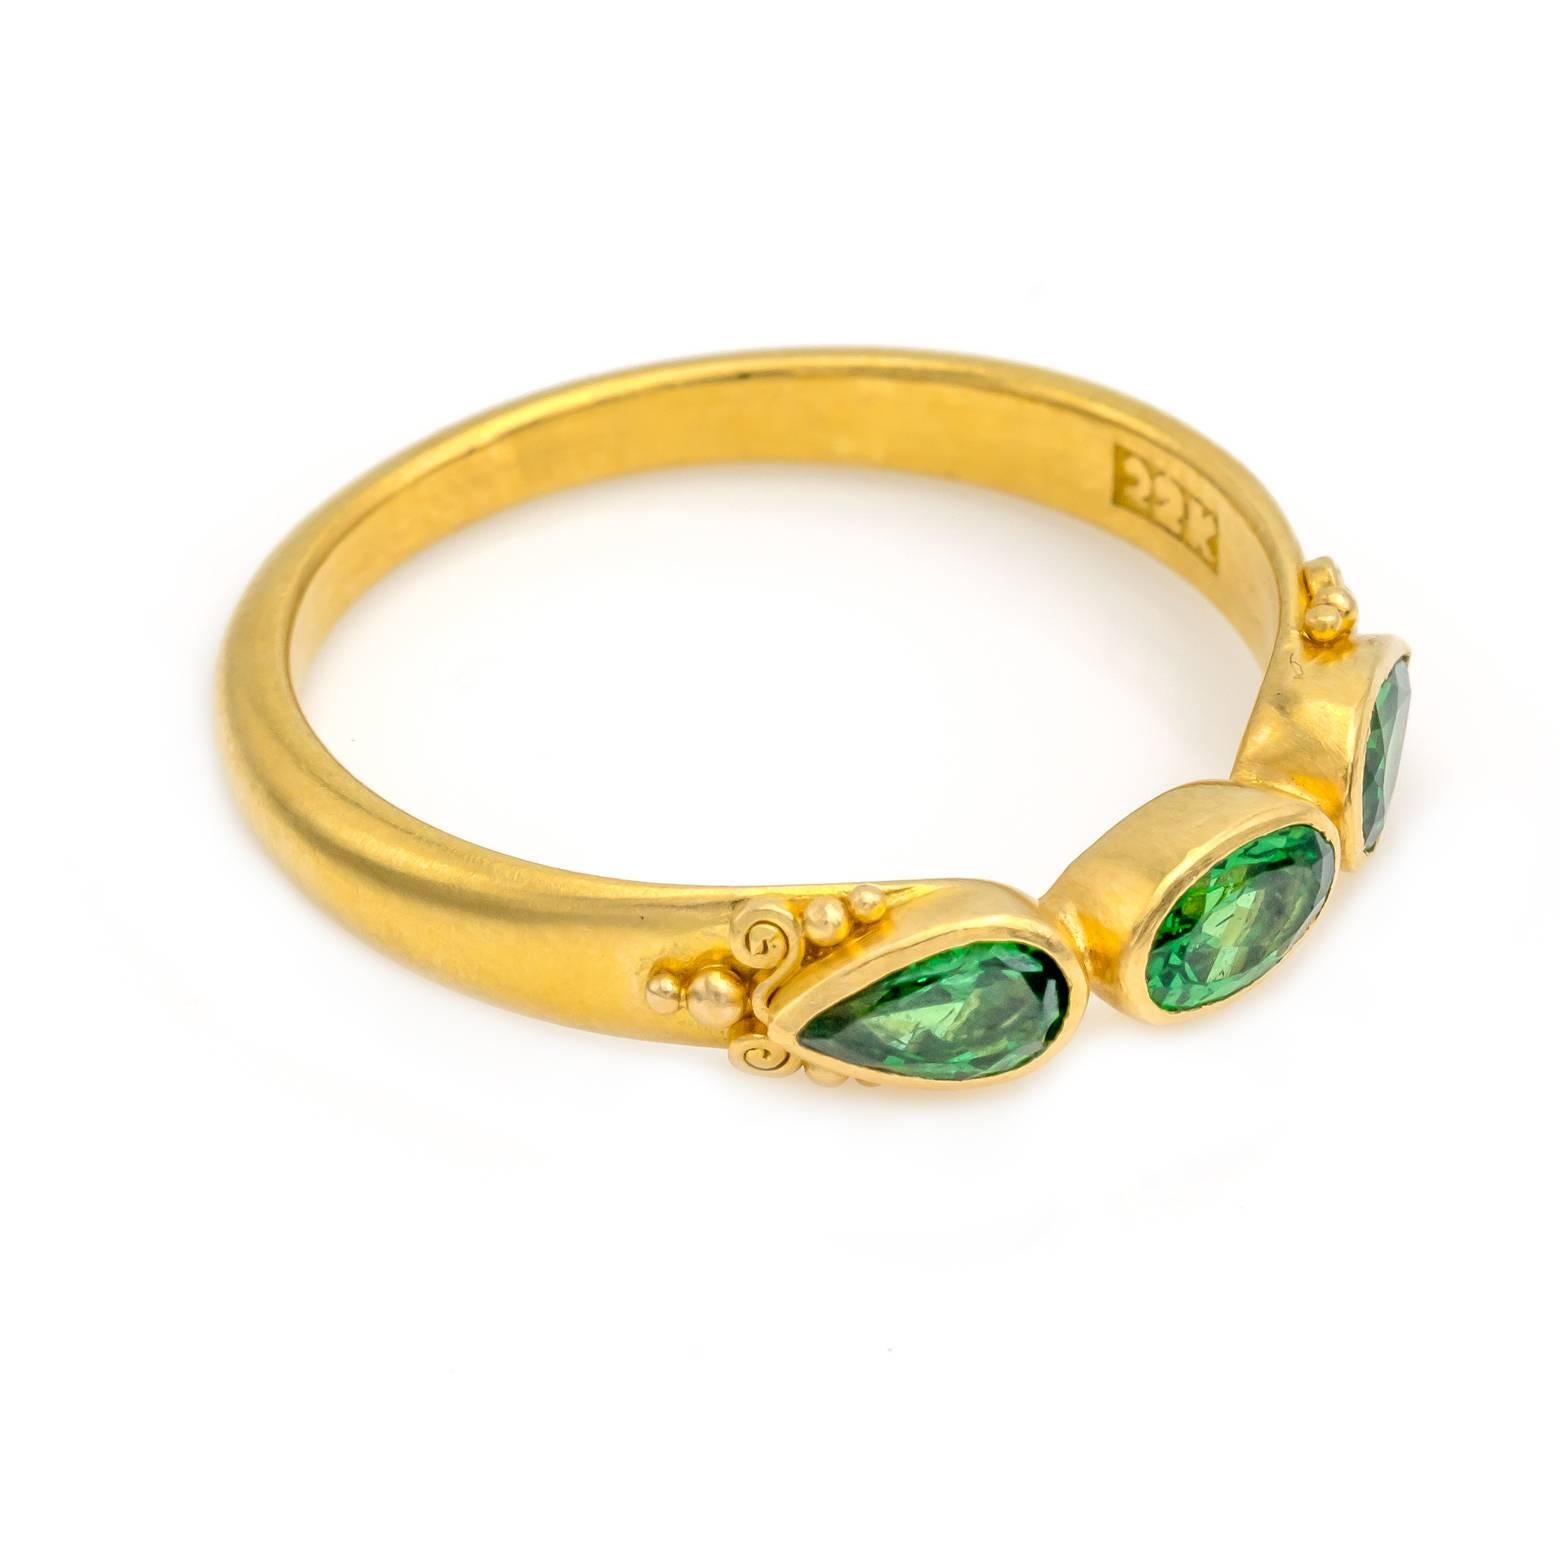 Pear Cut Oval and Pear Tsavorite Green Garnet Ring in 18 Karat Gold with Granulation